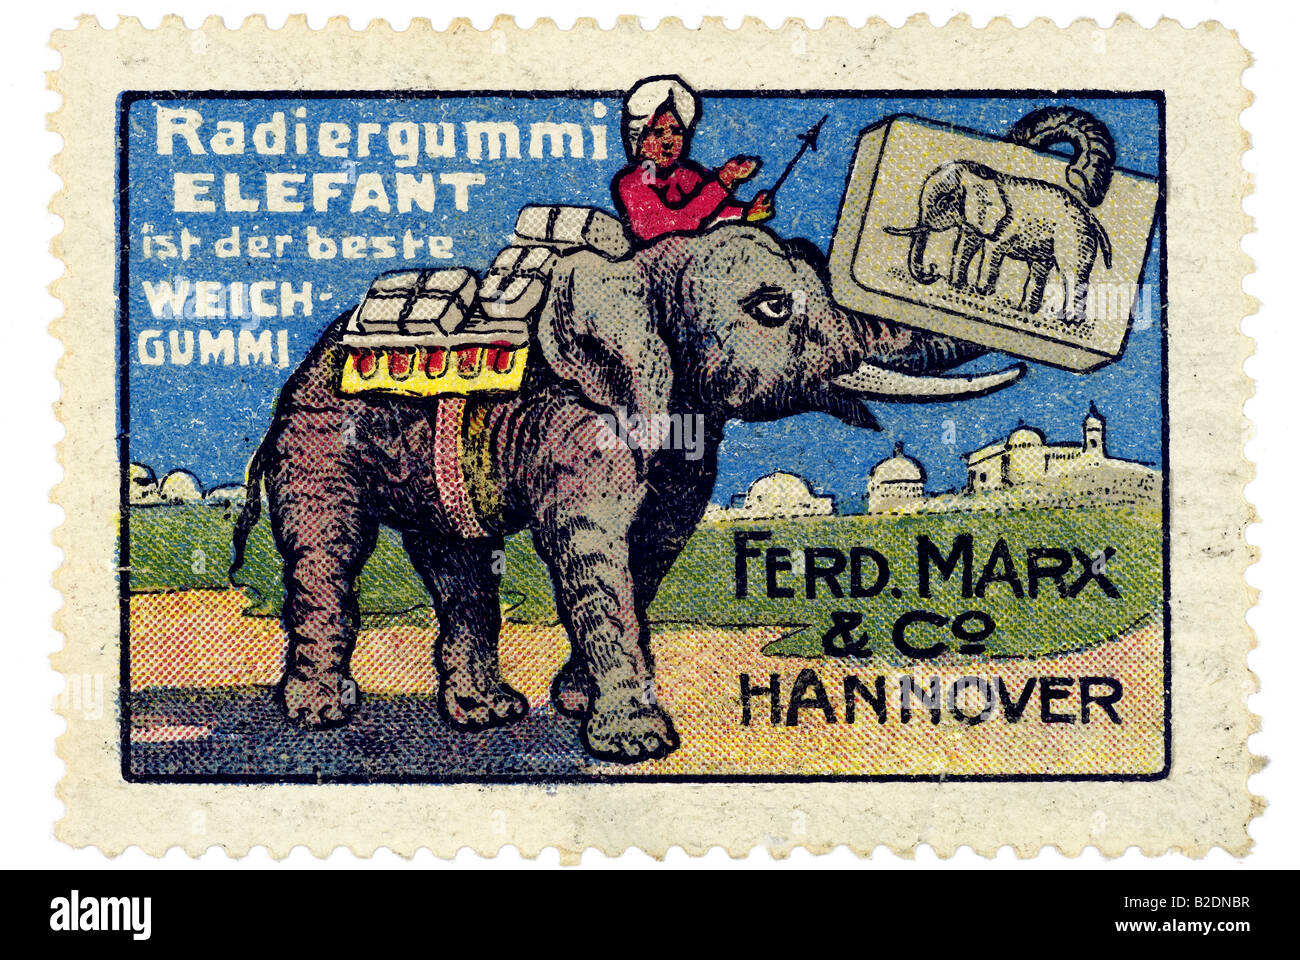 Timbro di trading Radiergummi Elefant ist der beste Weichgummi Fred Marx Co Hannover Foto Stock